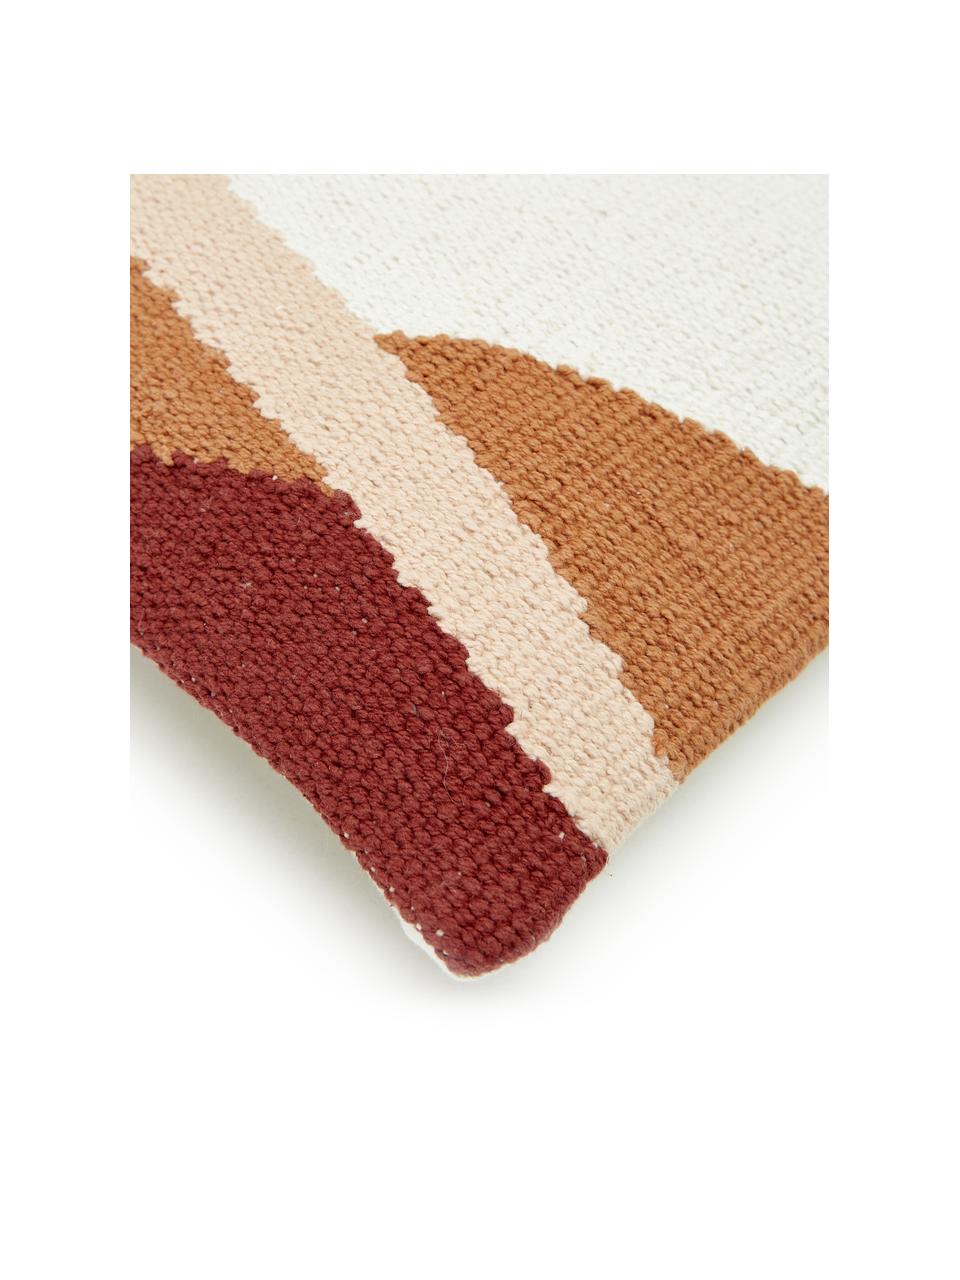 Handgewebte Kissenhülle Beta mit abstraktem Muster, 100% Baumwolle, Rosa, Weiss, B 30 x L 50 cm